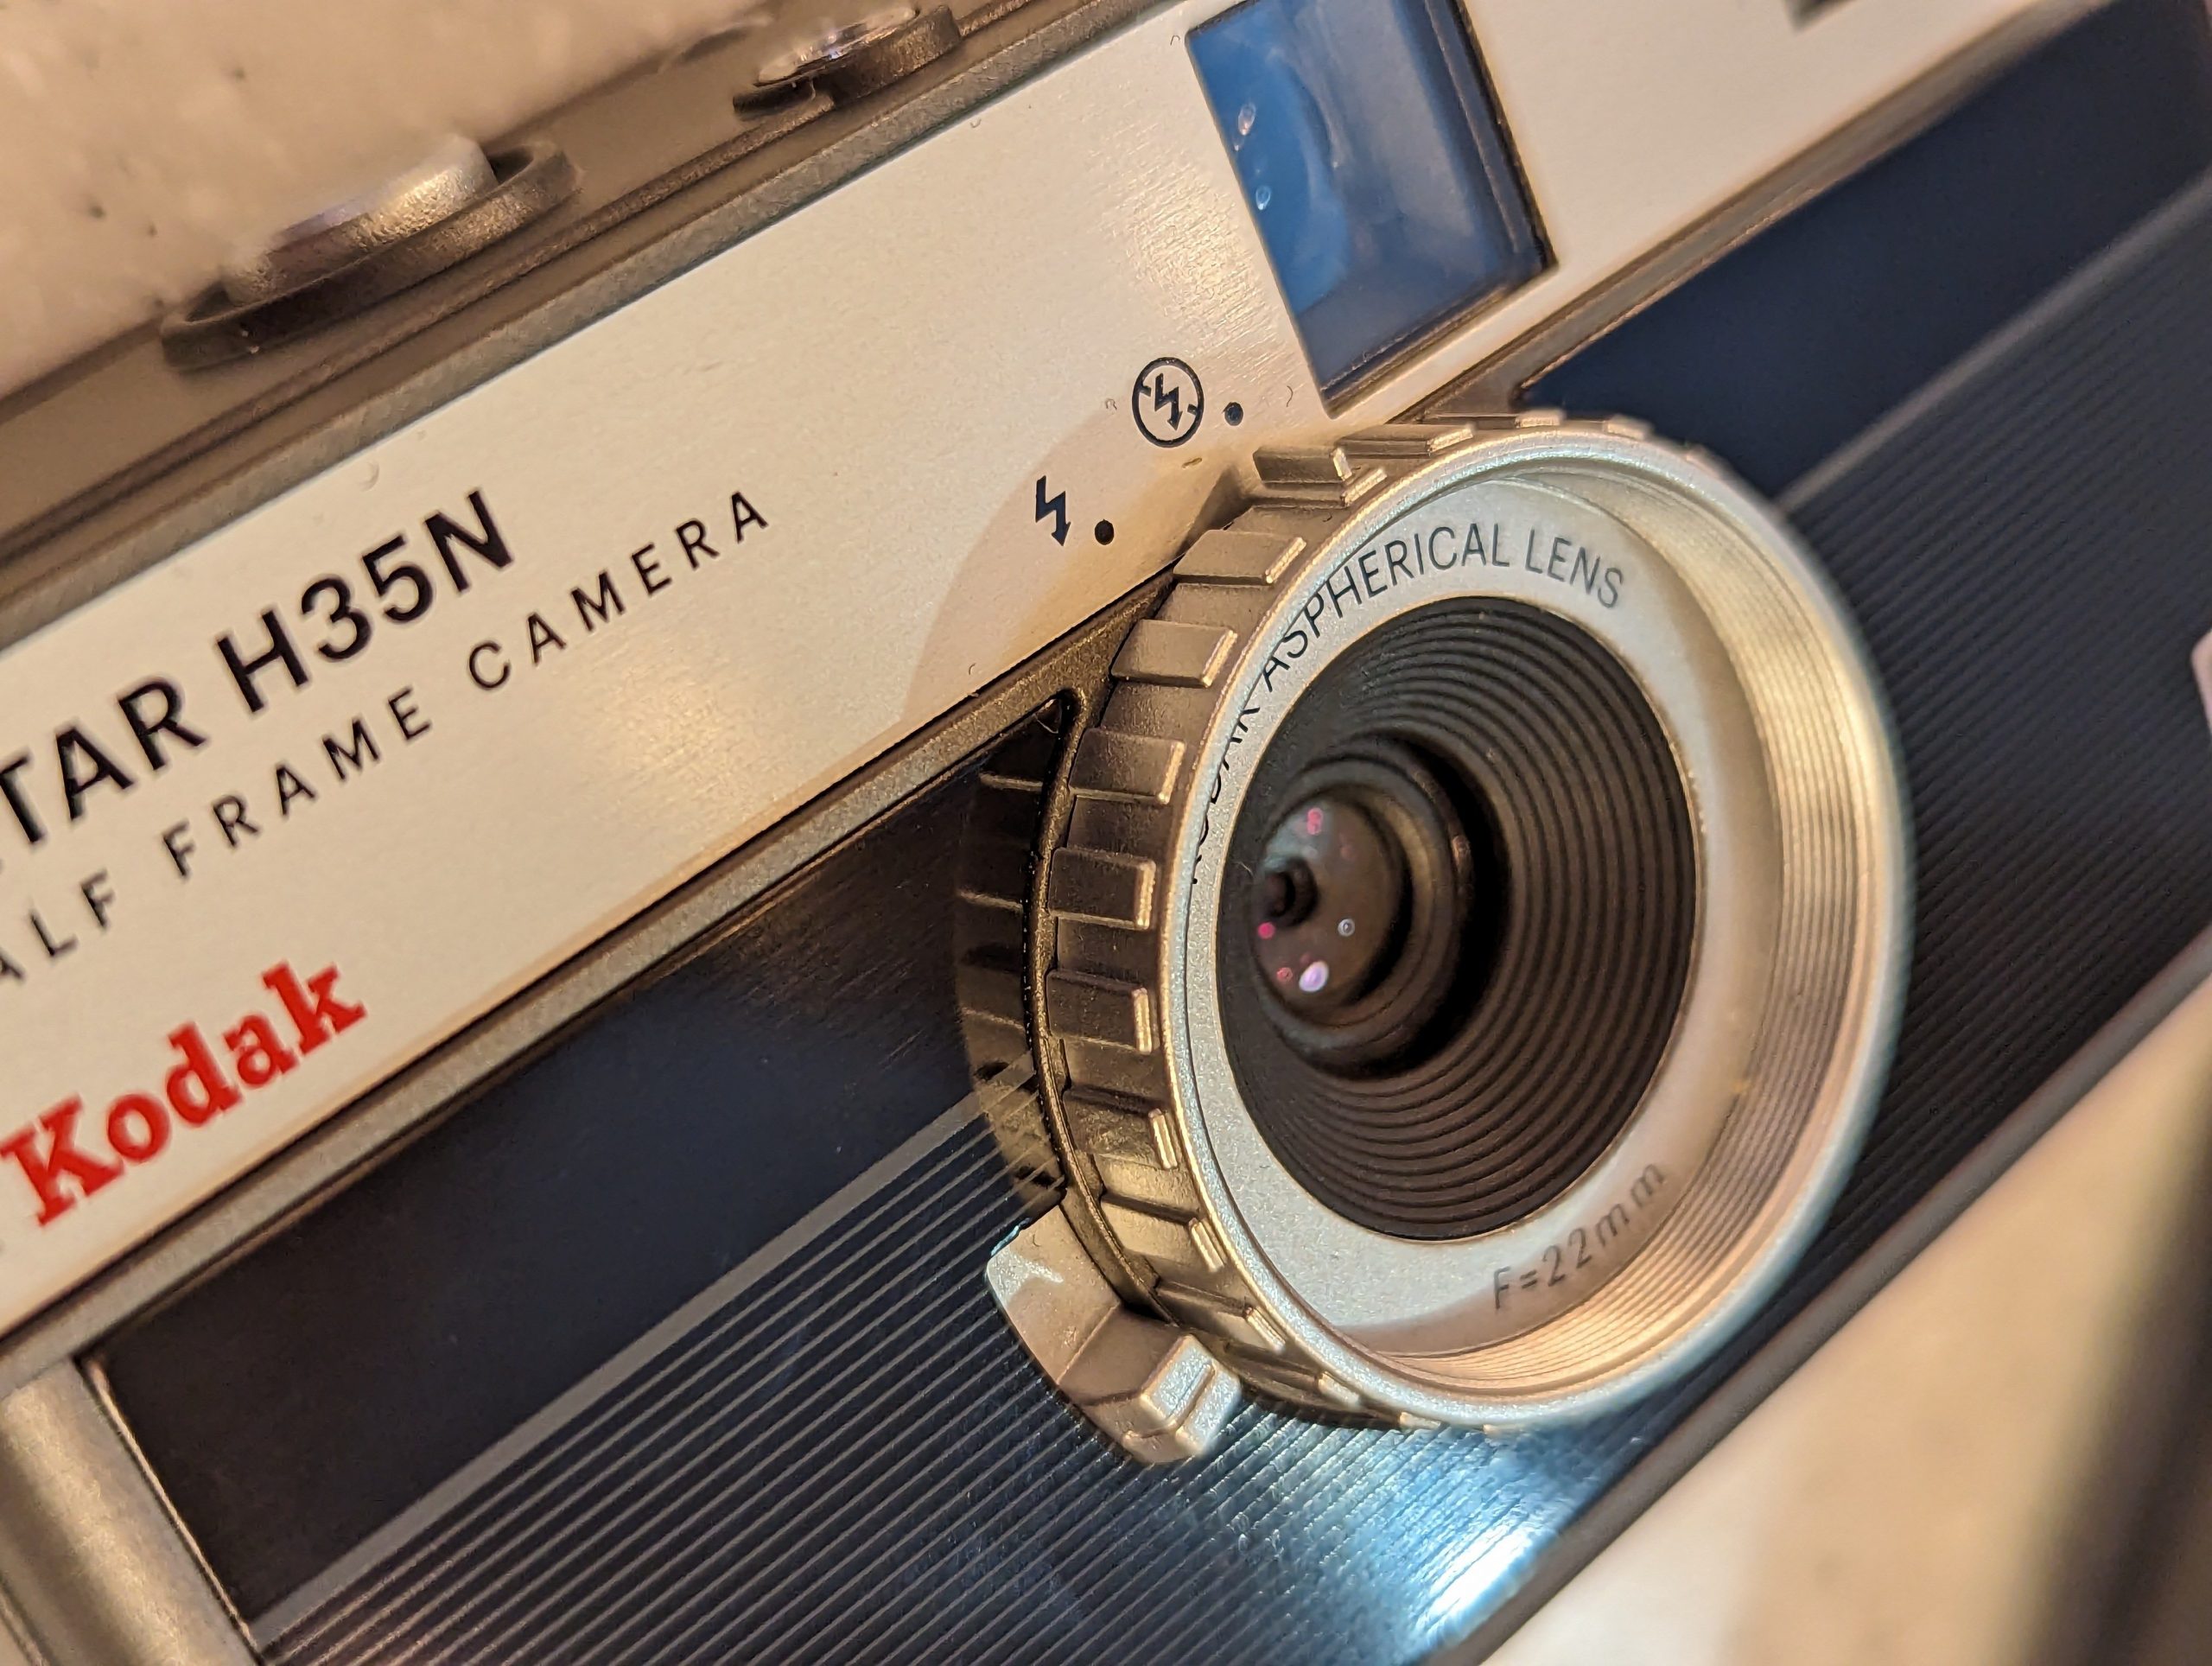 Lens of the Kodak Ektar H35N